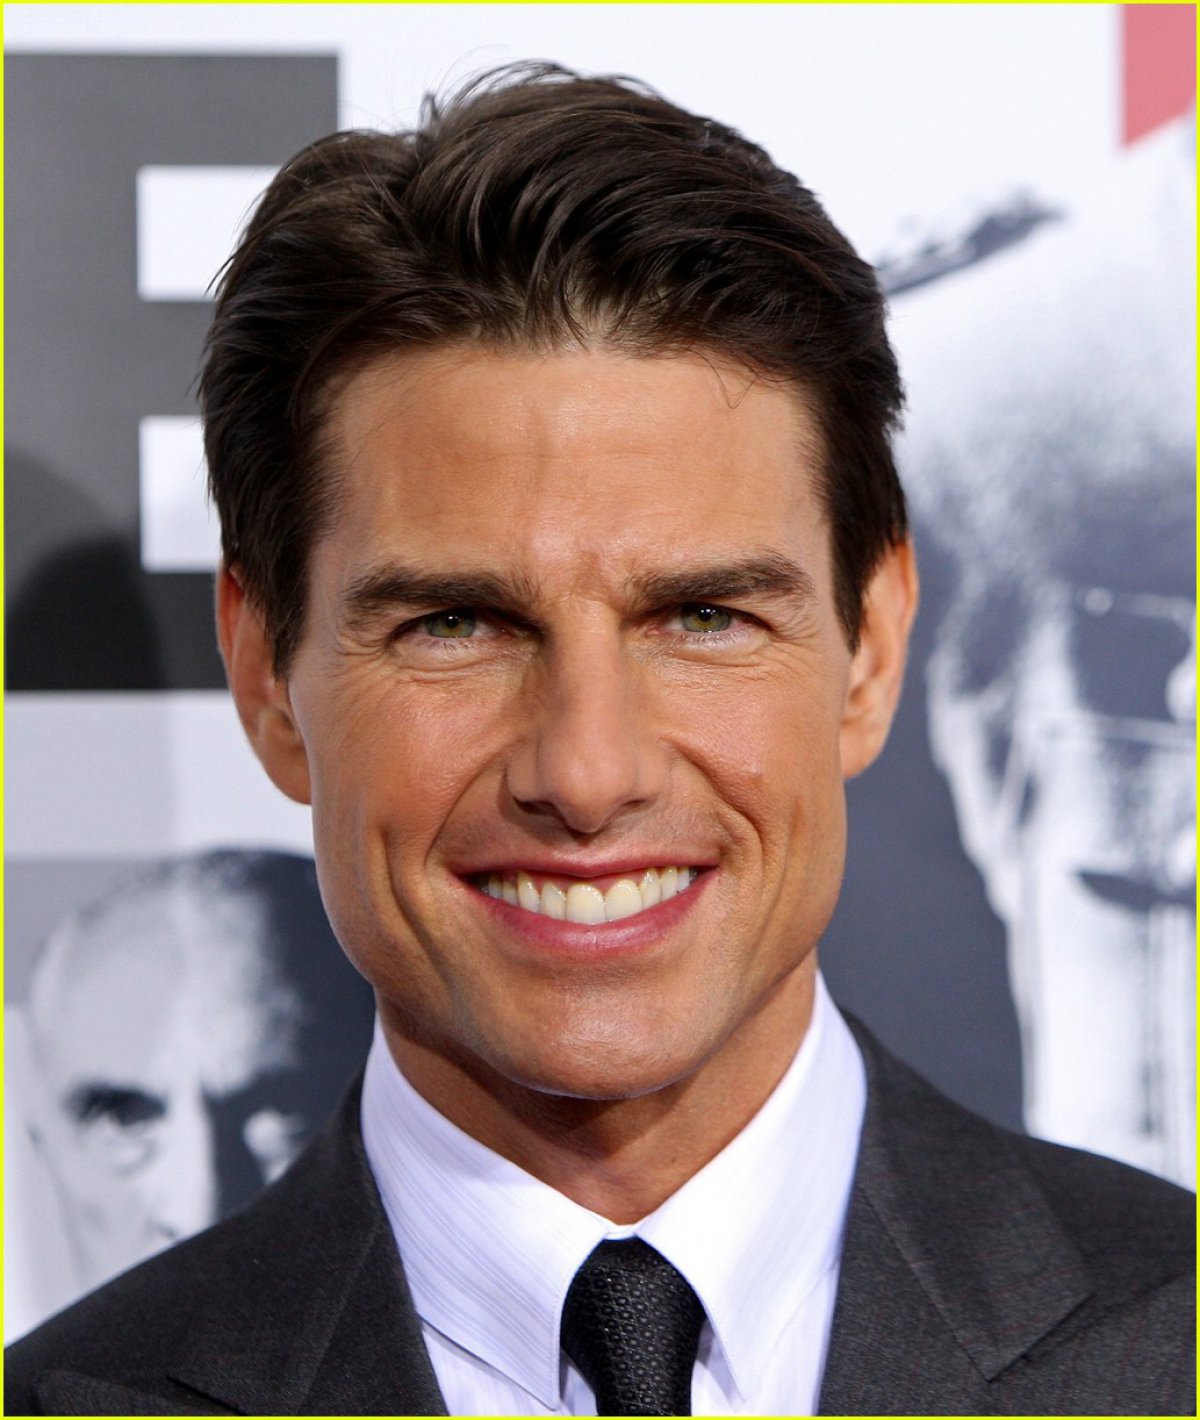 6. Tom Cruise